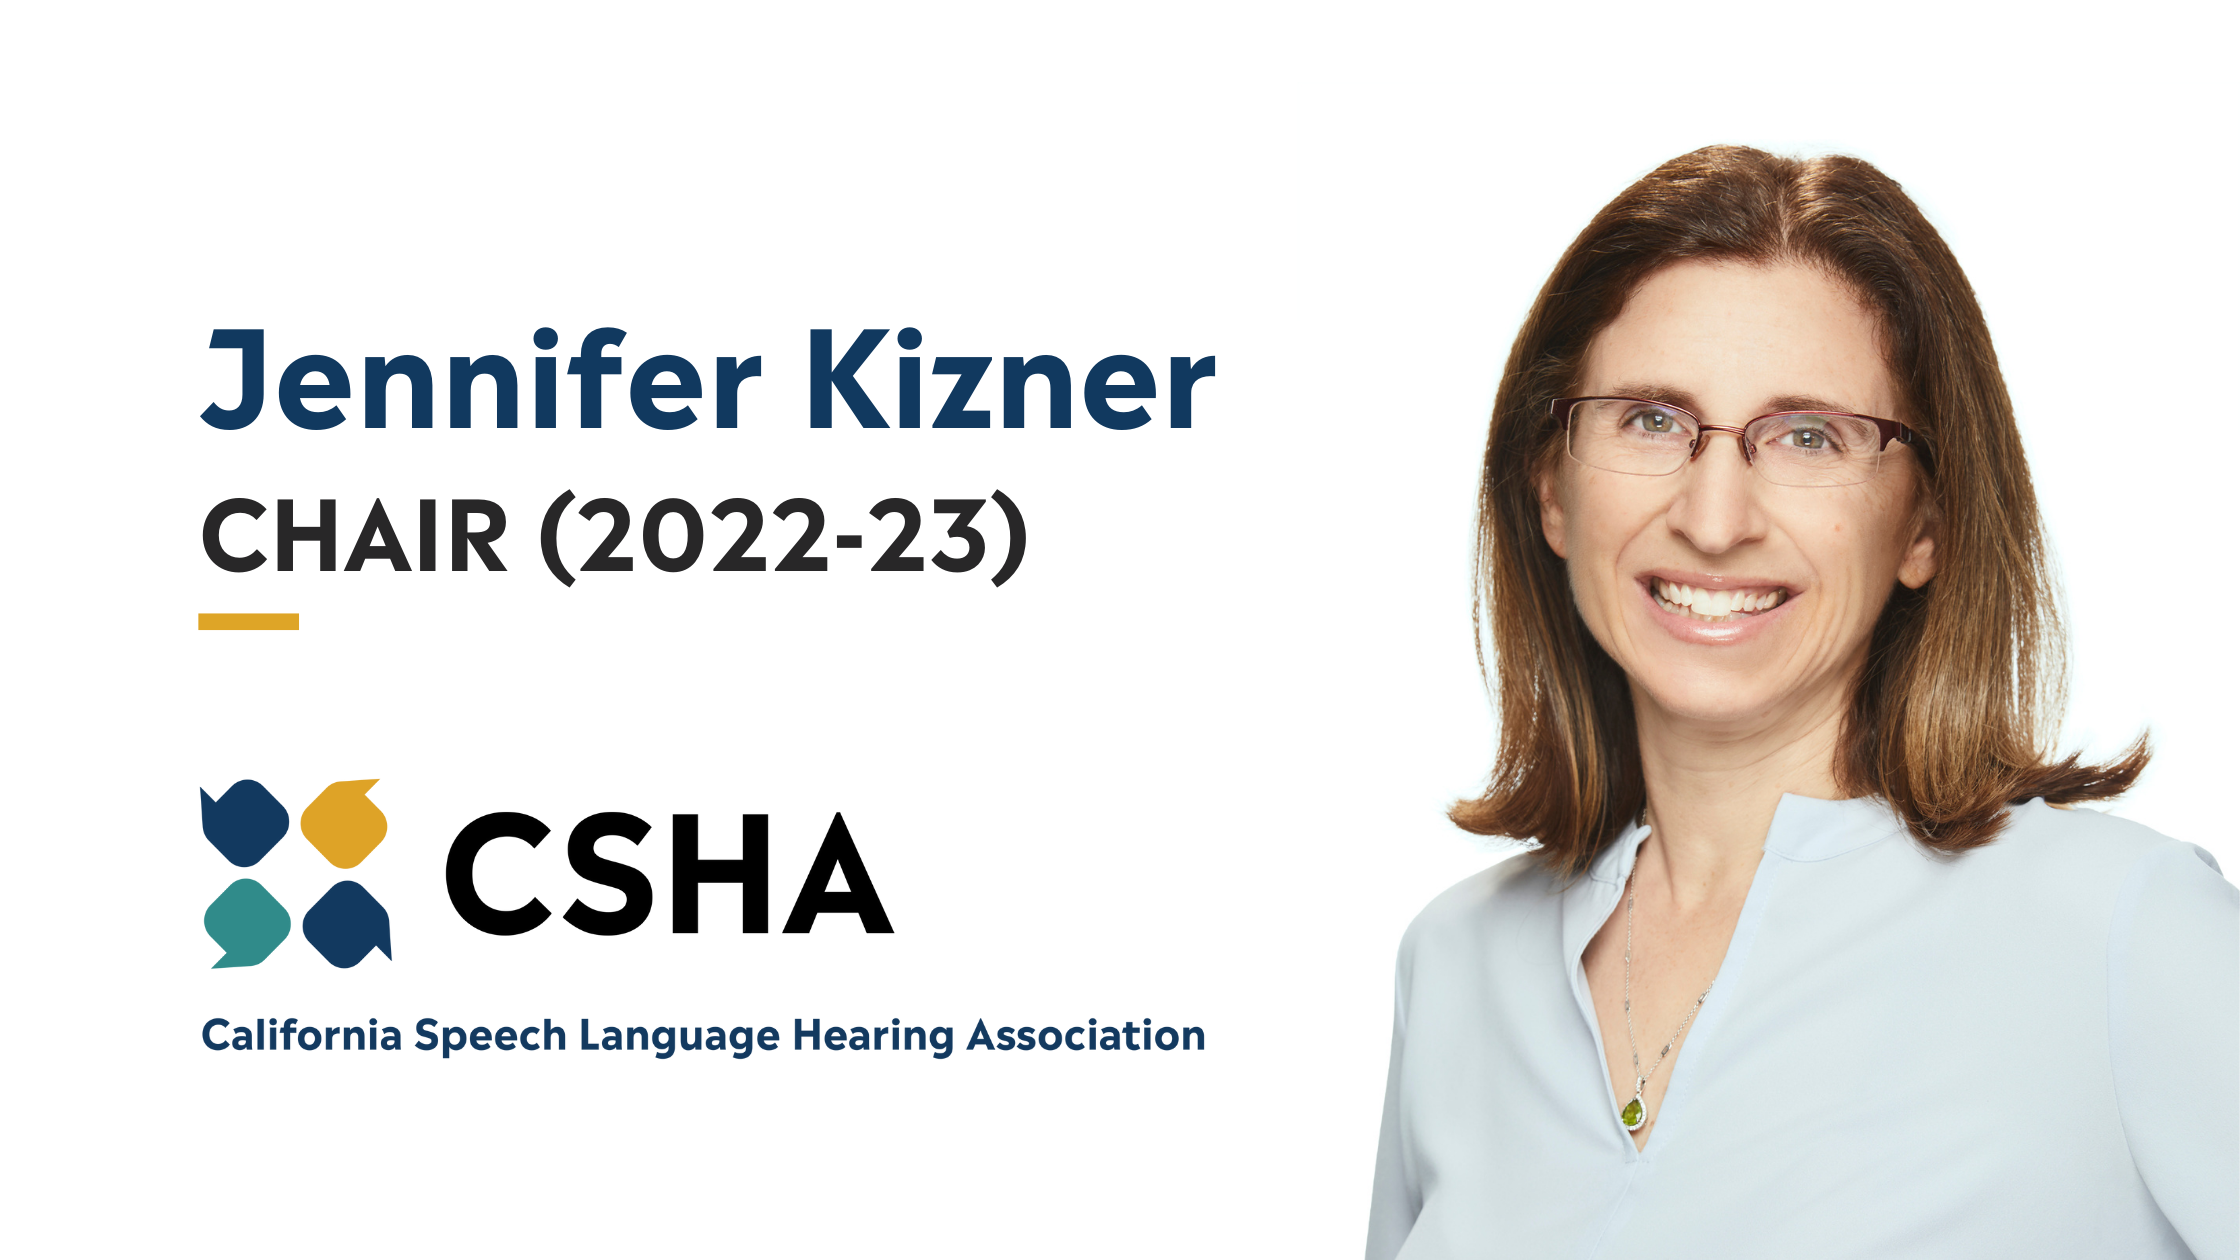 NEWS RELEASE: CSHA Announces Jennifer Kizner as New Board Chair